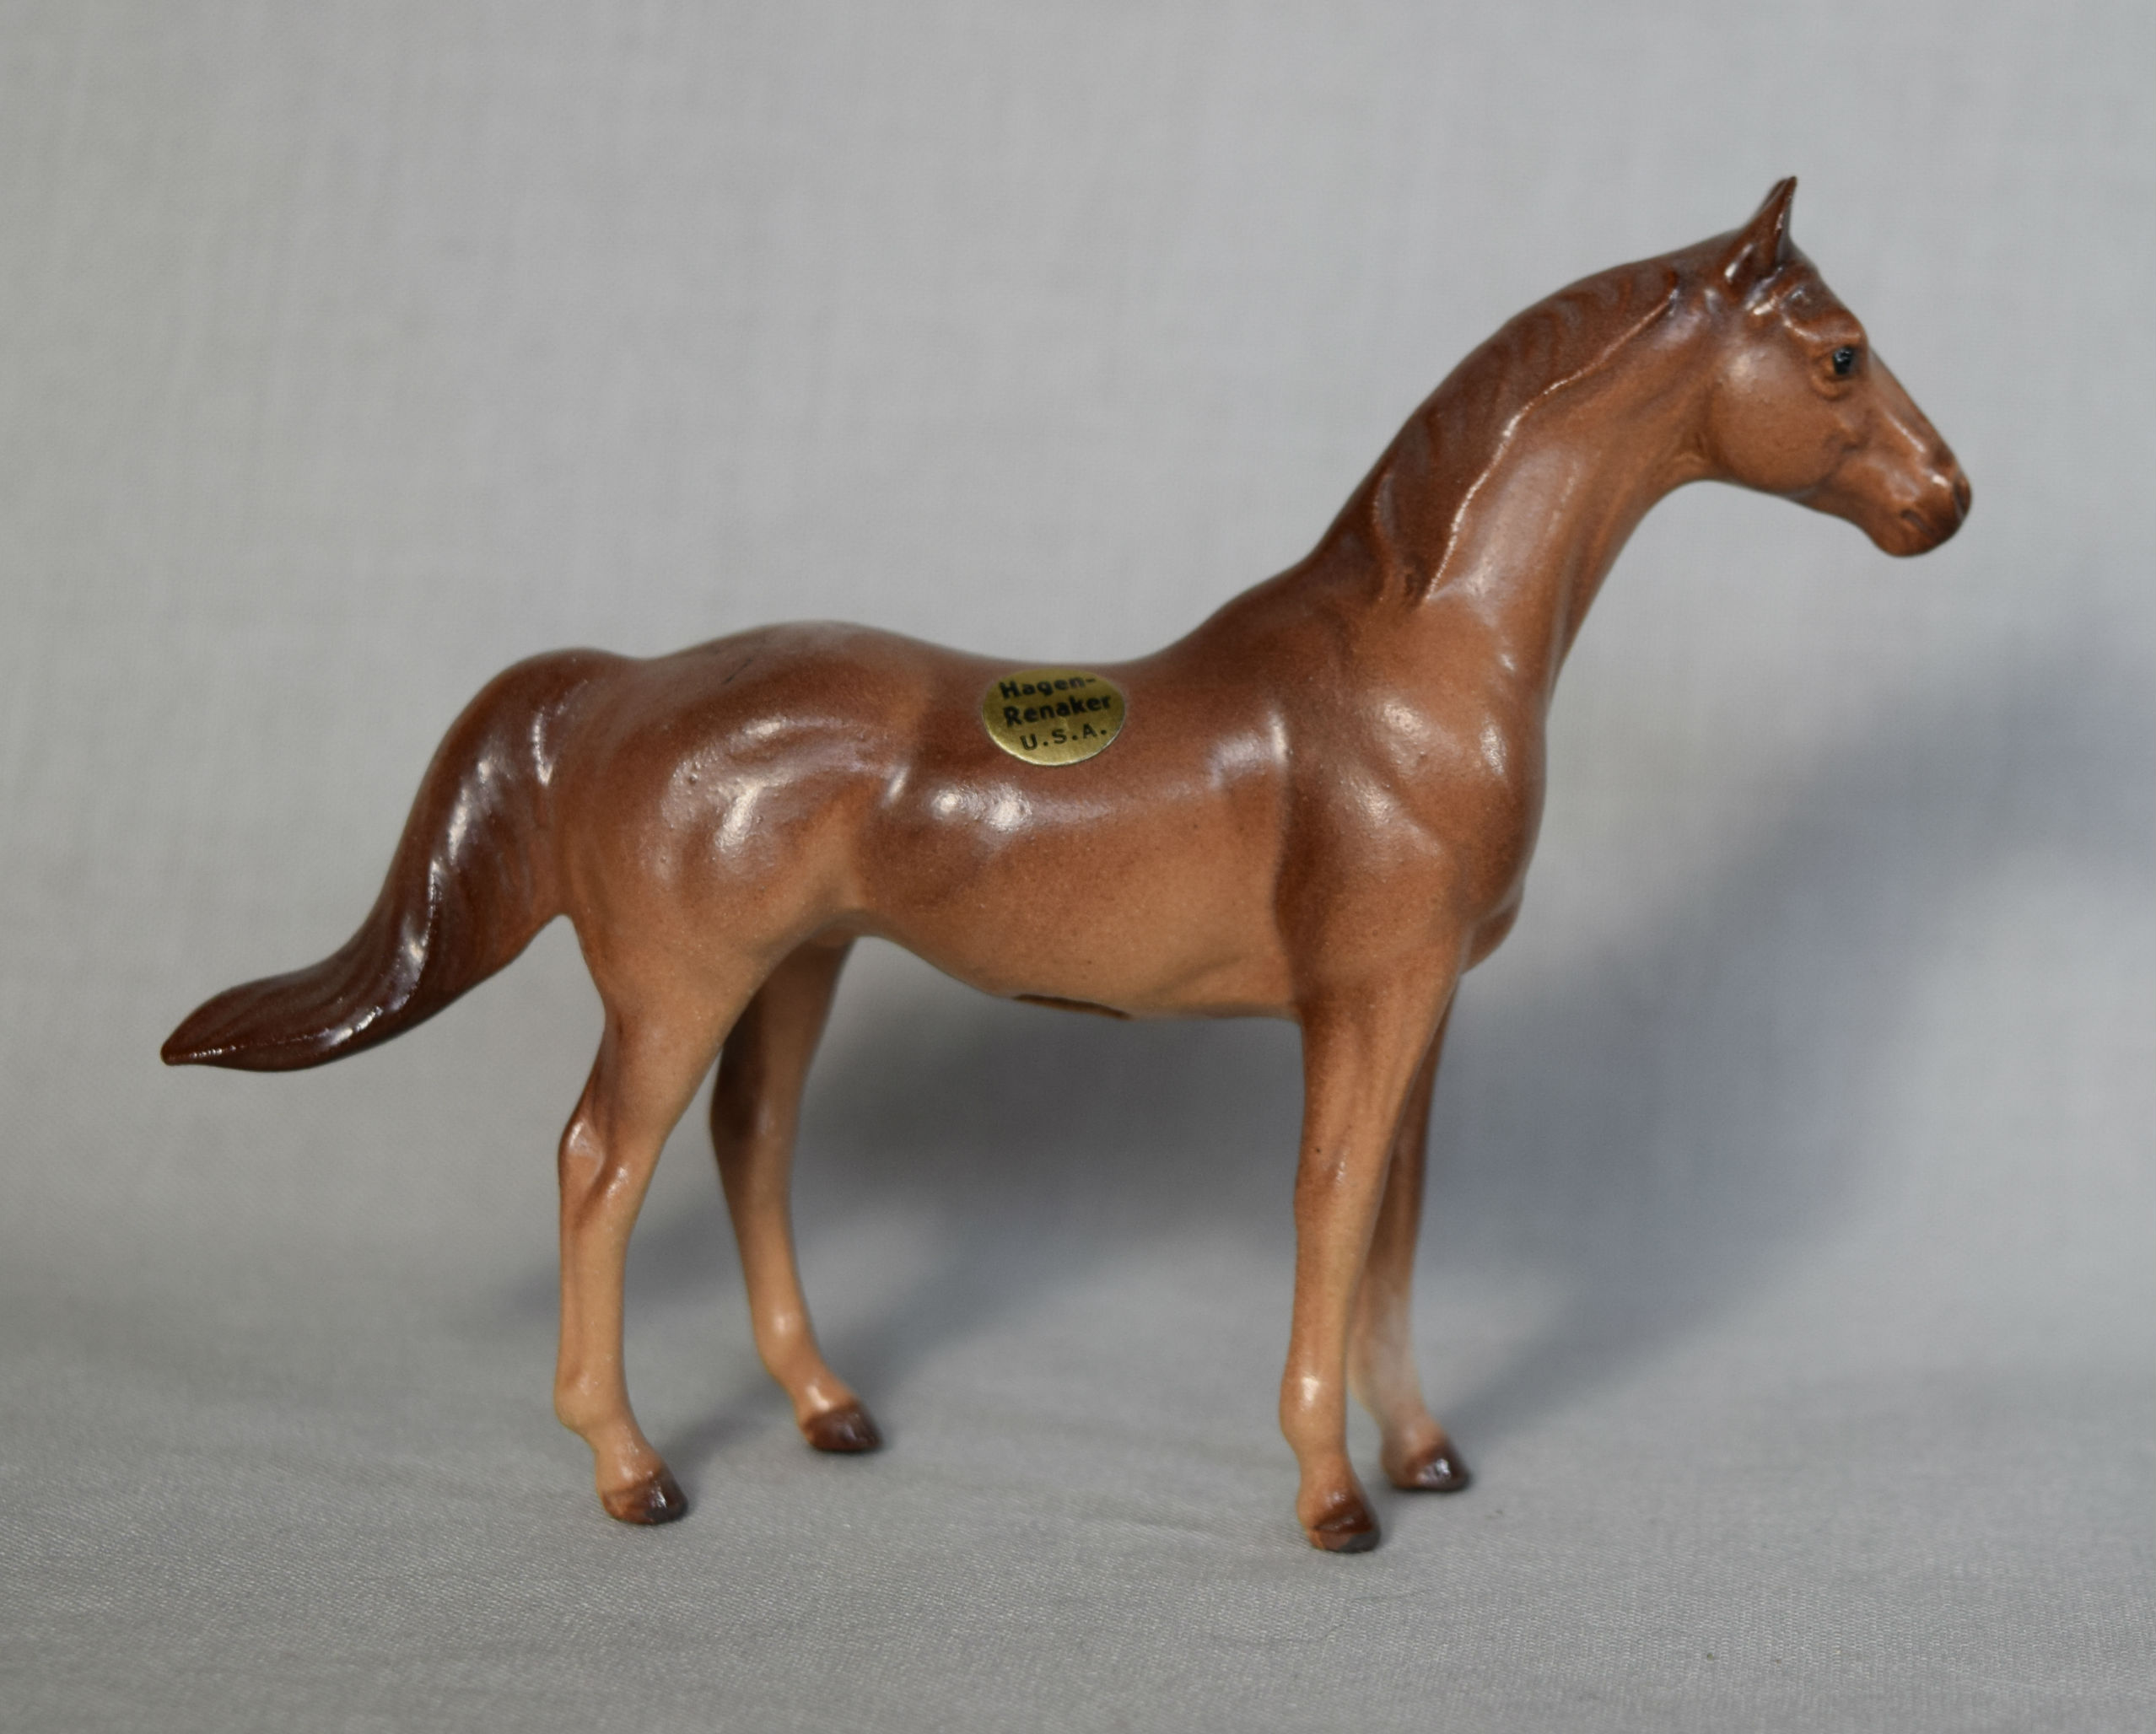 Thoroughbred Racehorse "Silky Sullivan" main image